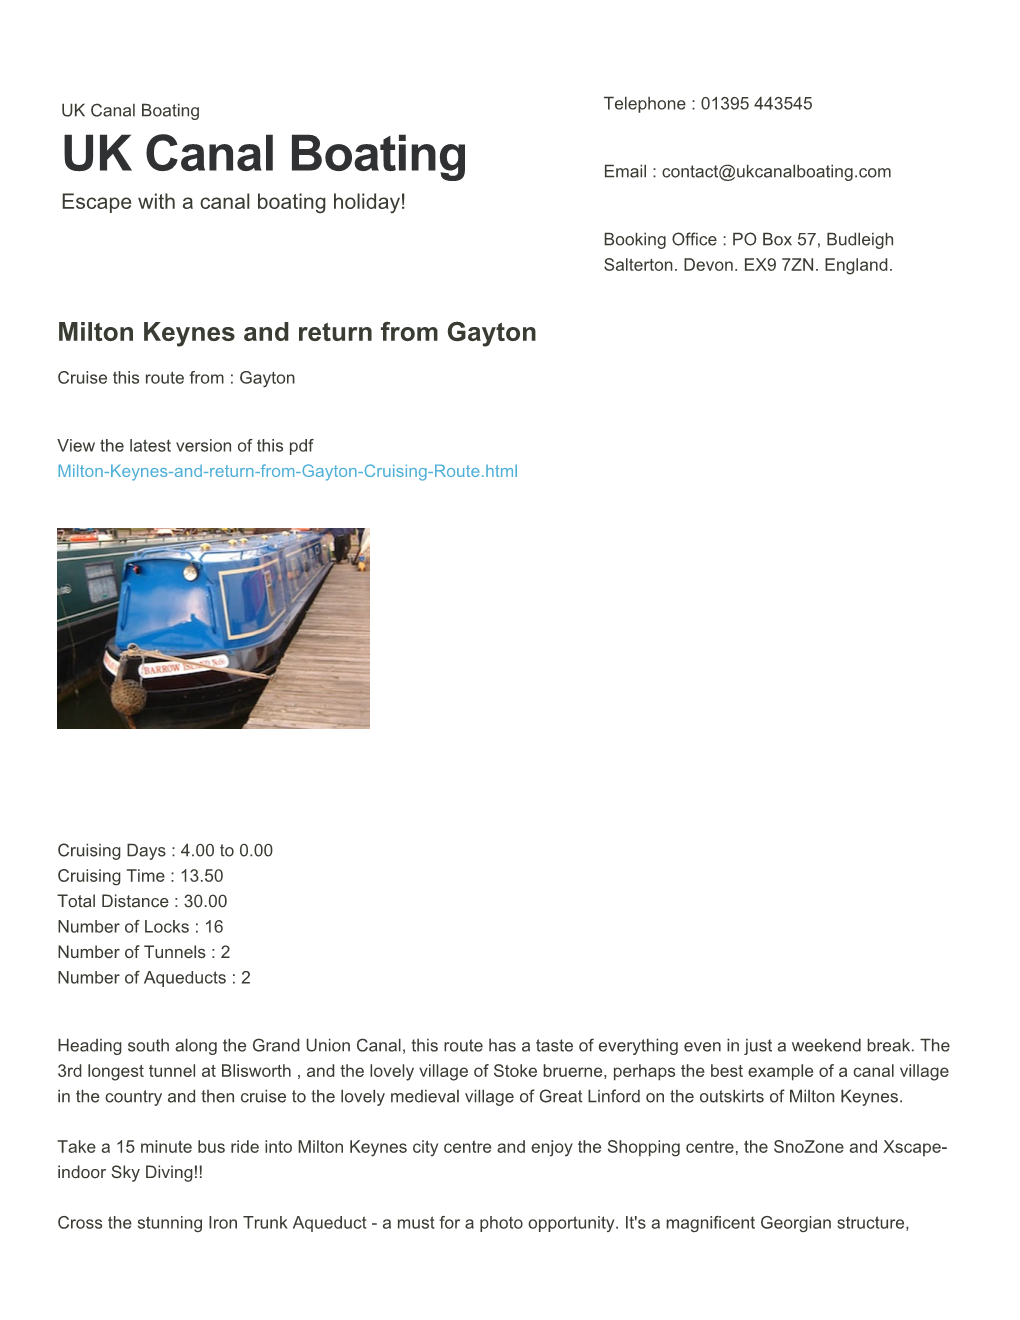 Milton Keynes and Return from Gayton | UK Canal Boating